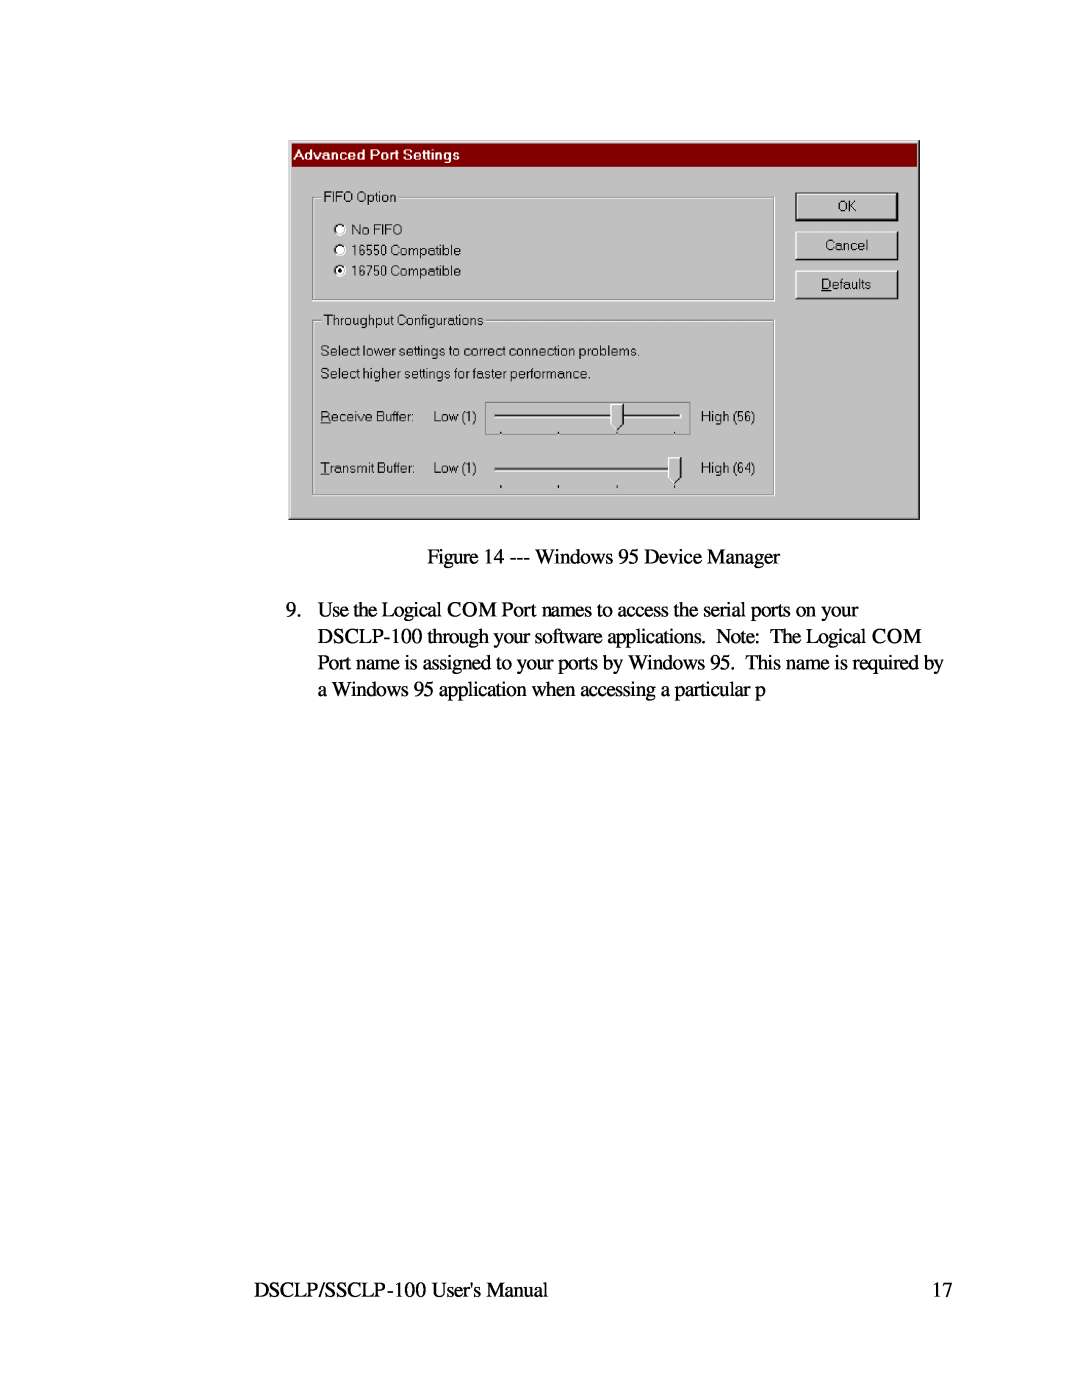 Quatech DSCLP-100 user manual Windows 95 Device Manager, DSCLP/SSCLP-100 Users Manual 